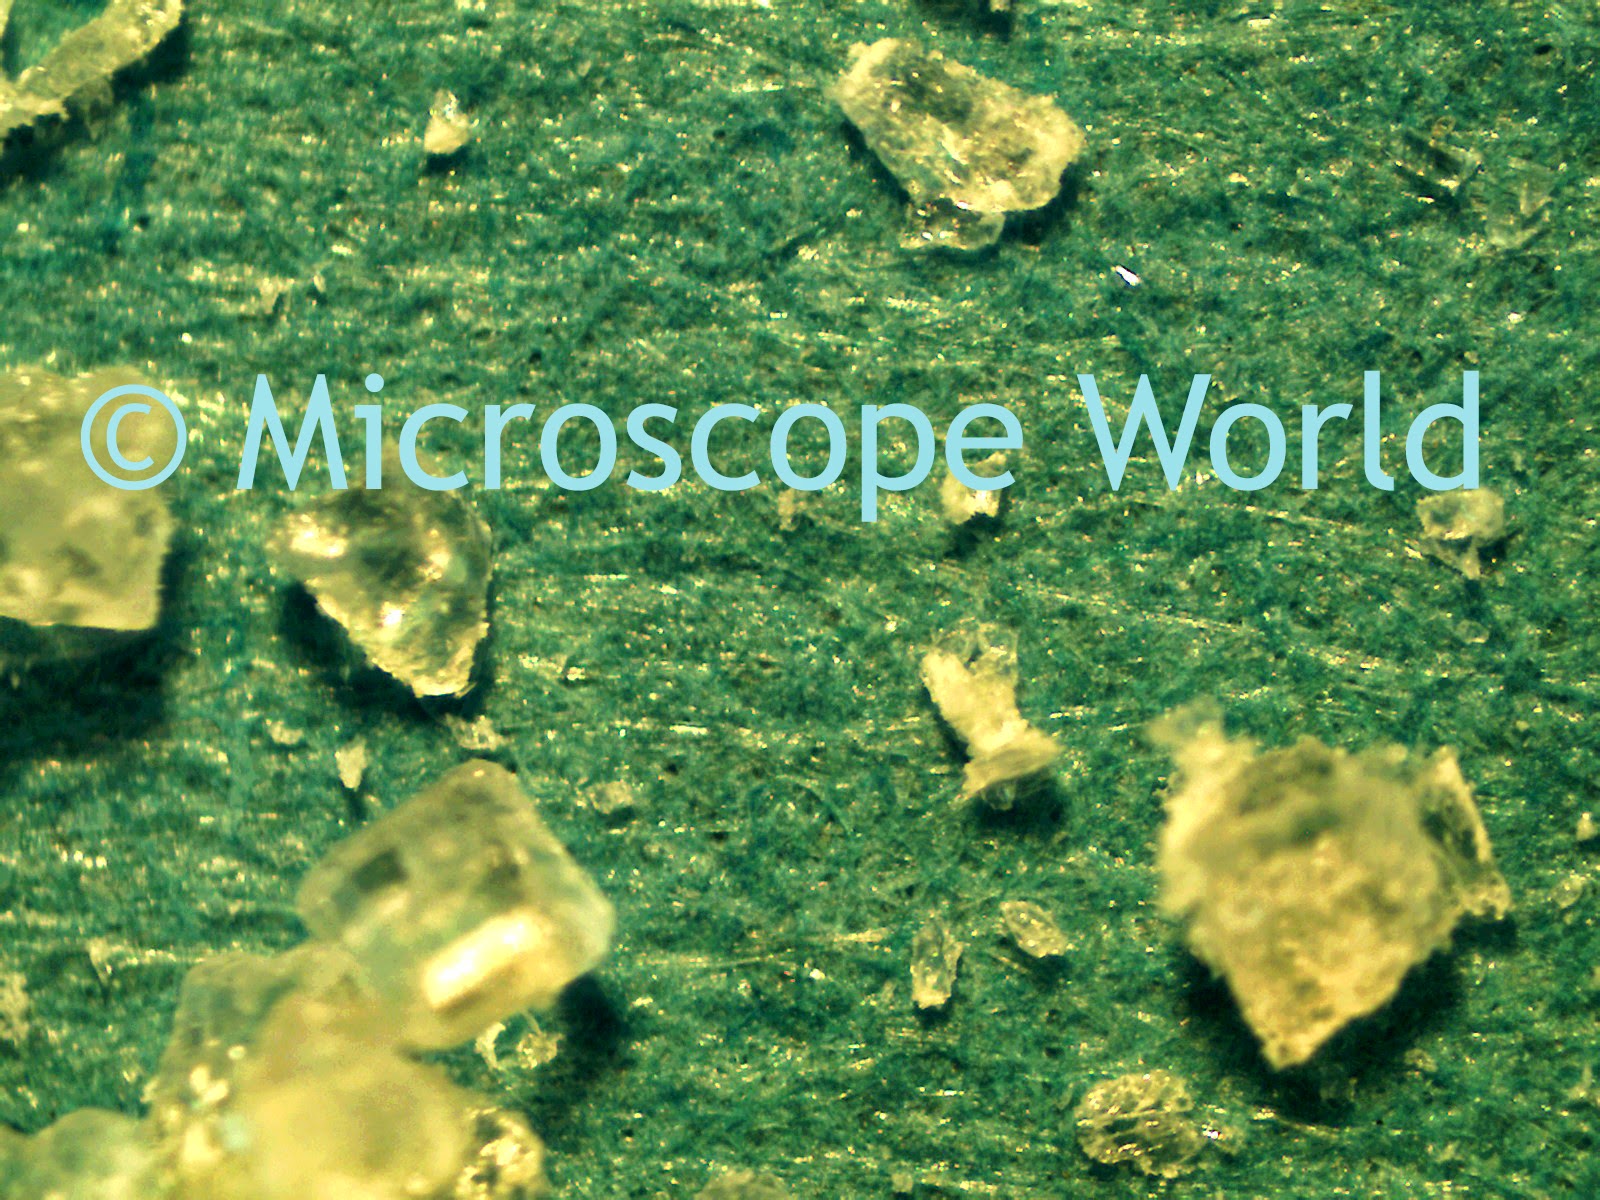 Sugar under a stereo microscope at 40x.